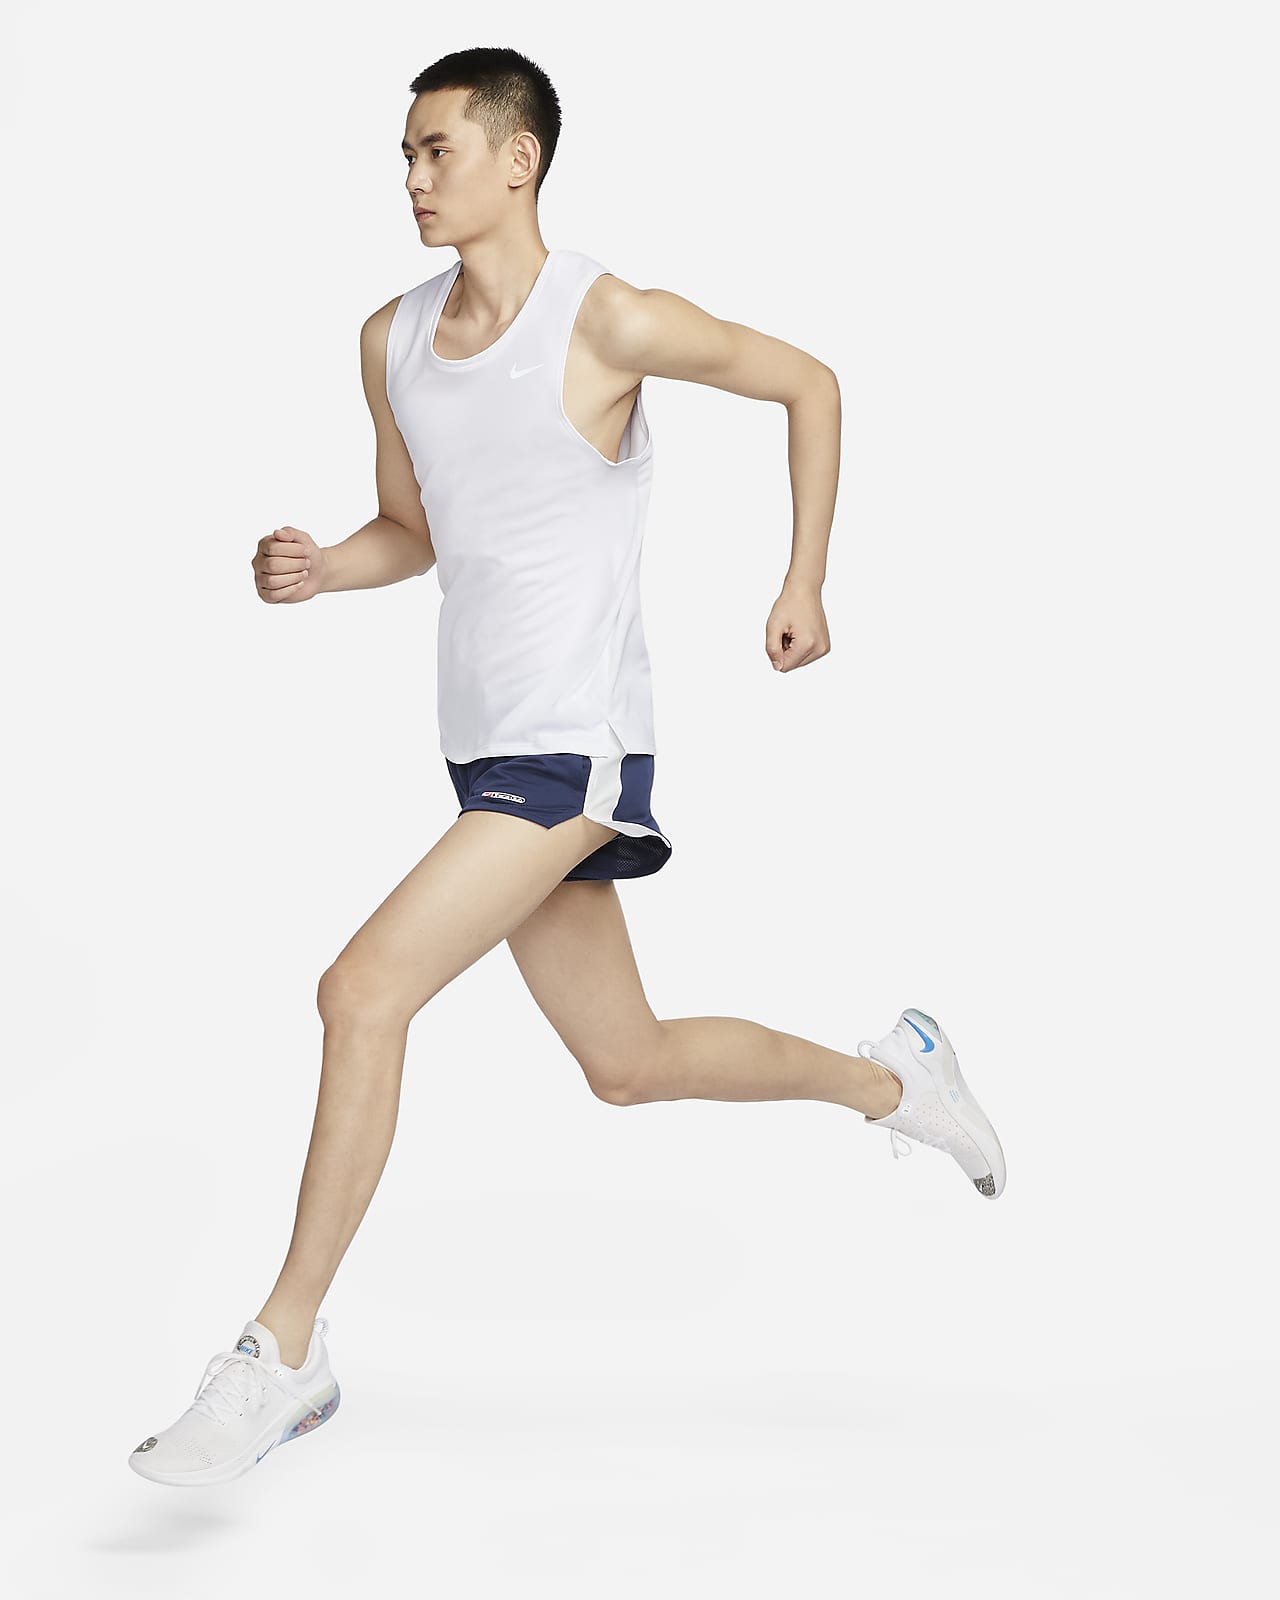 Monogrammed Running Shorts - Athletic Shorts w/ Liner